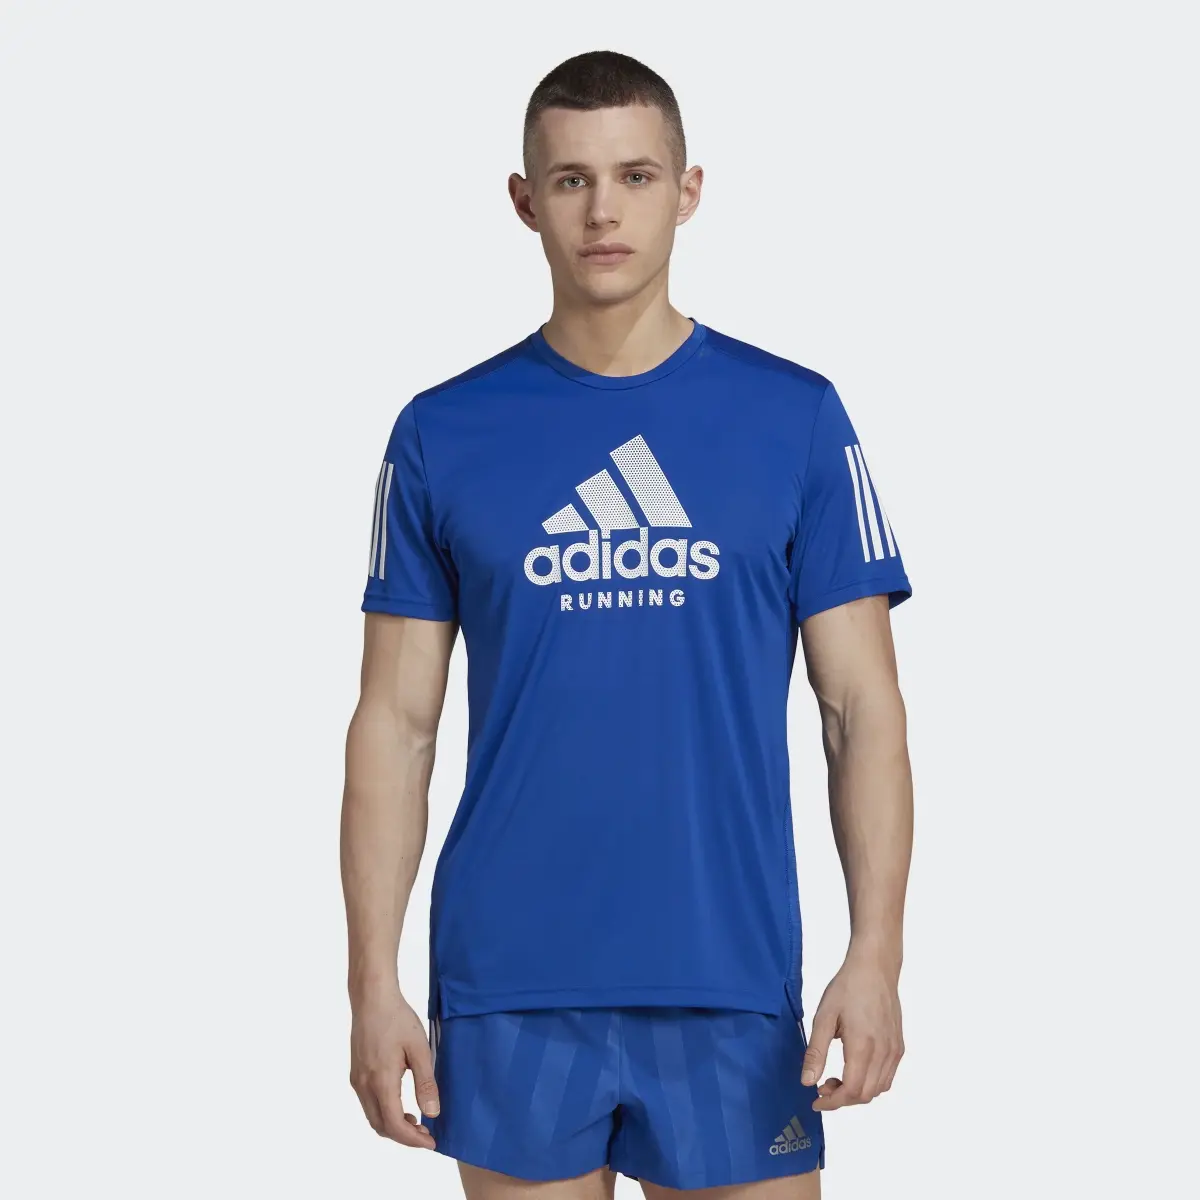 Adidas Own the Run AEROREADY Graphics In-Line Running Short Sleeve T-Shirt. 2